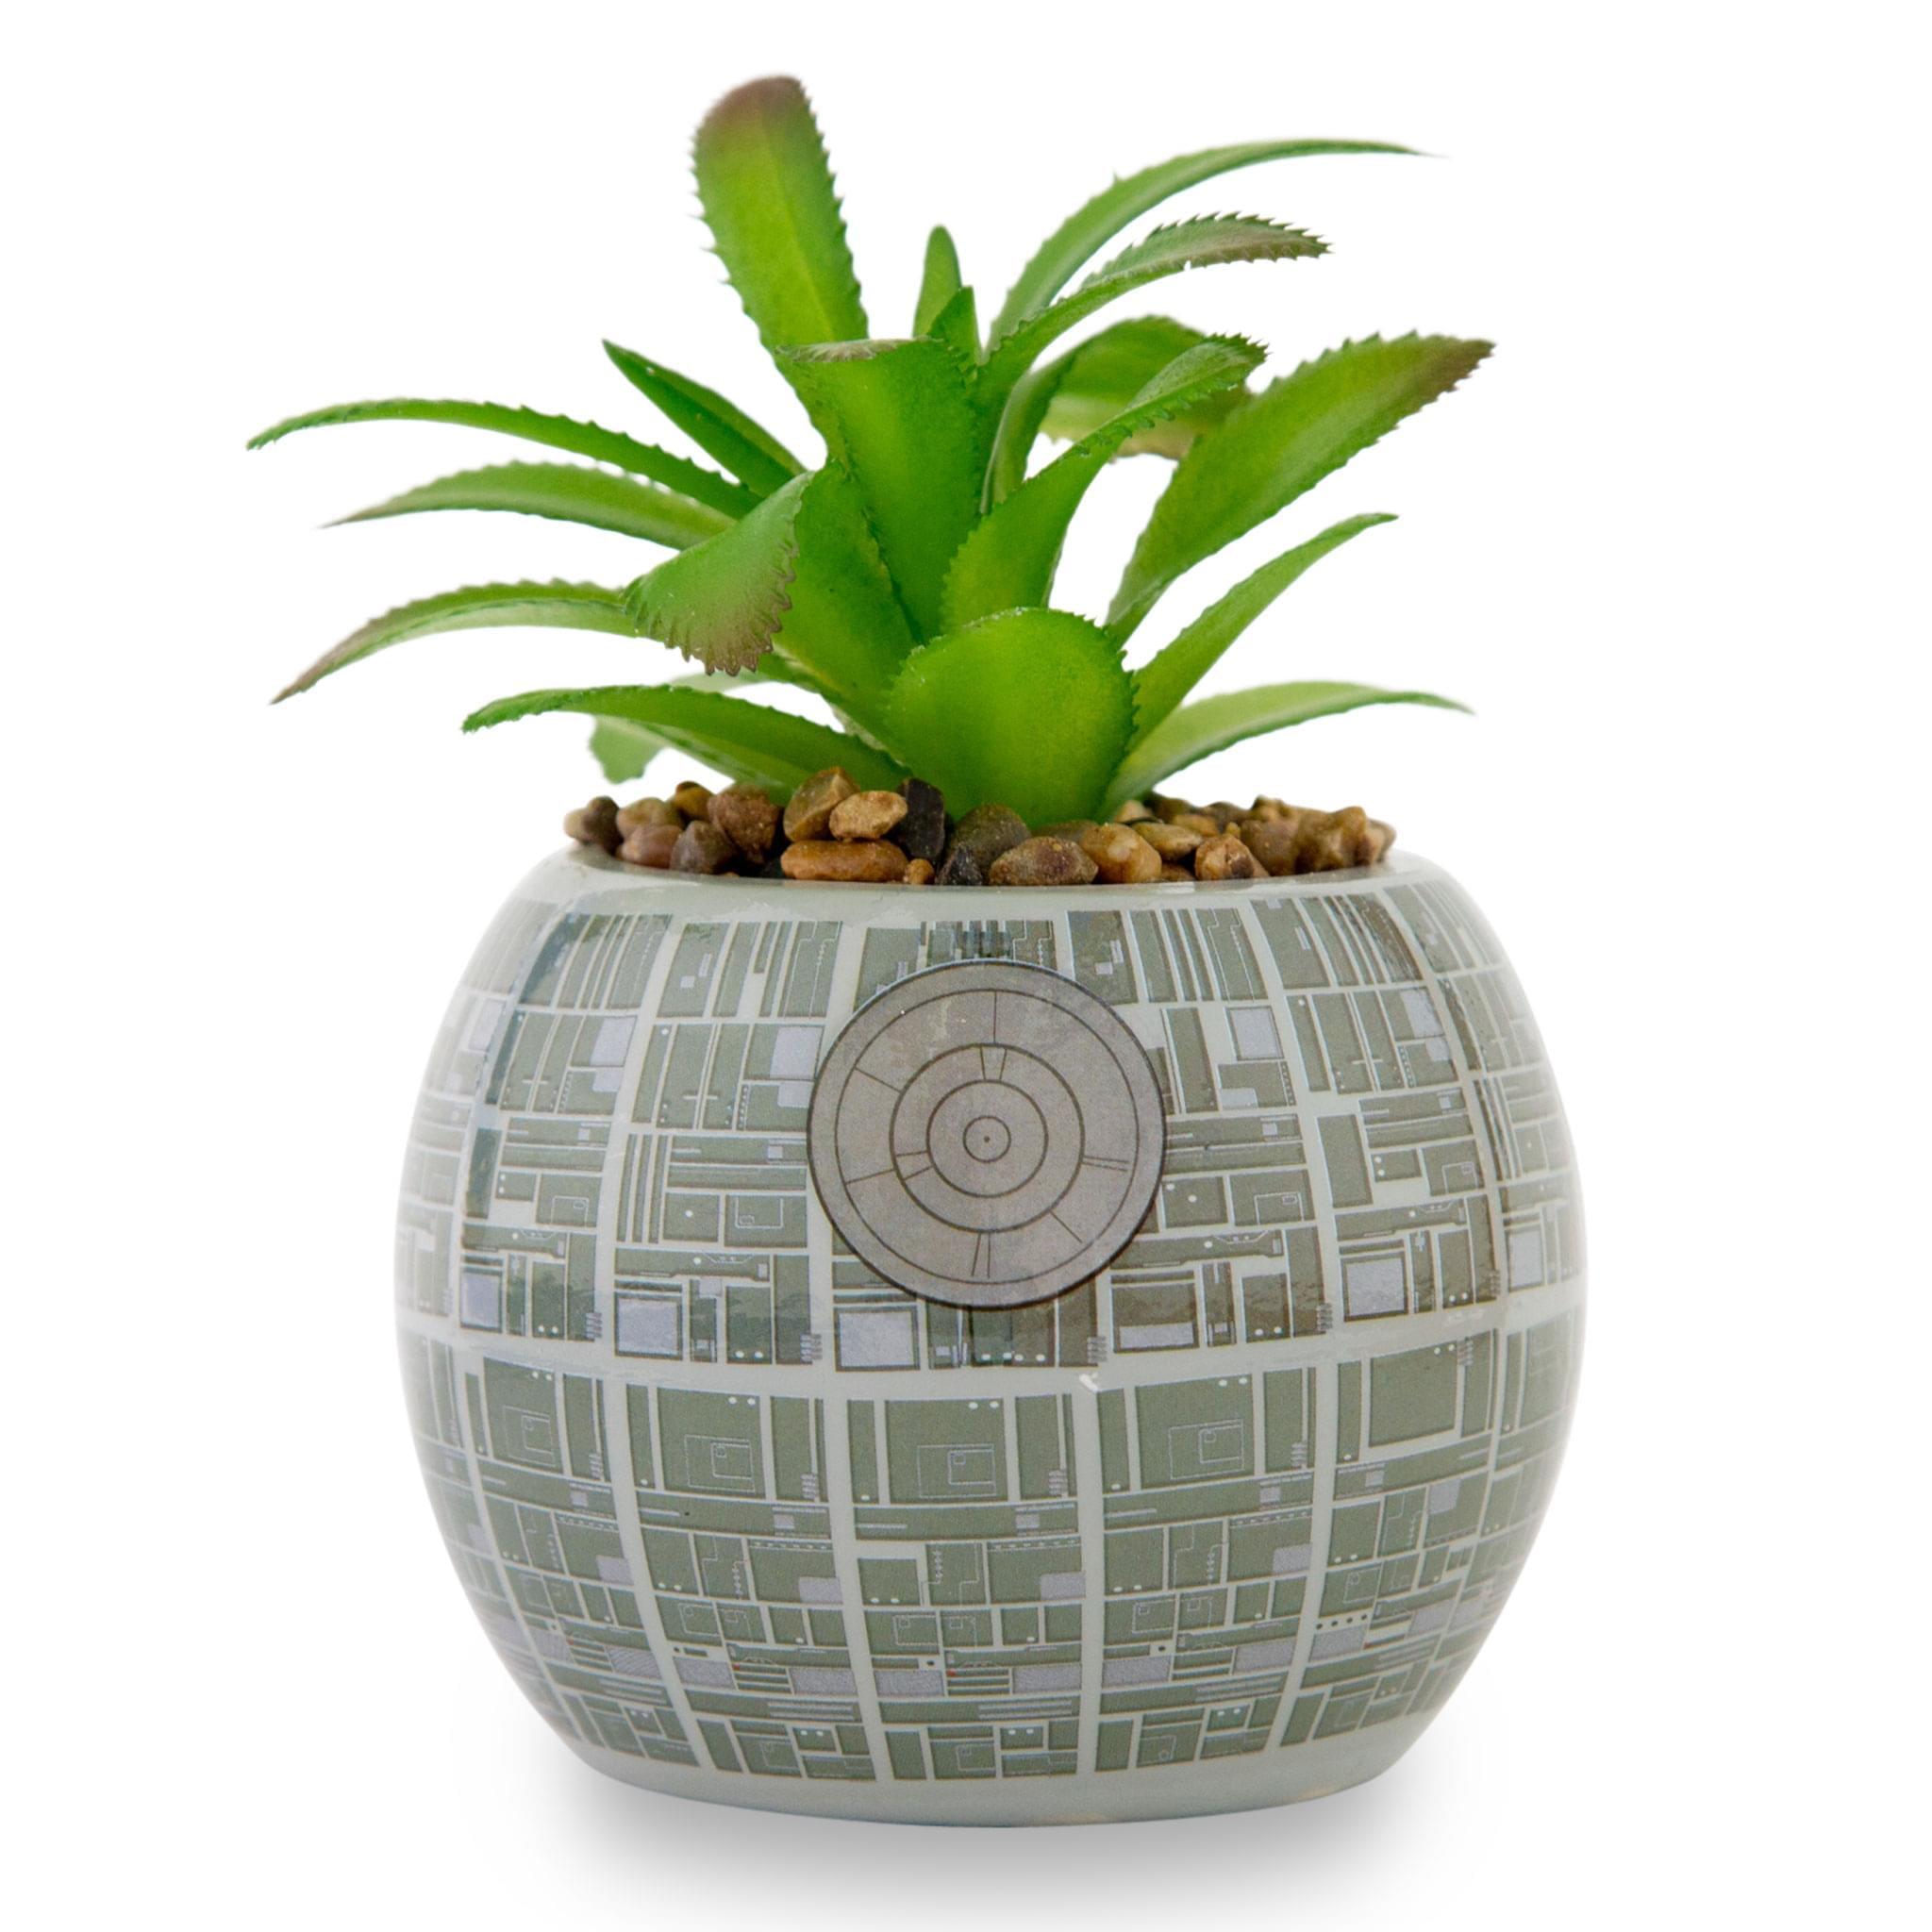 Galactic Mini Ceramic Death Star Planter with Lifelike Succulent